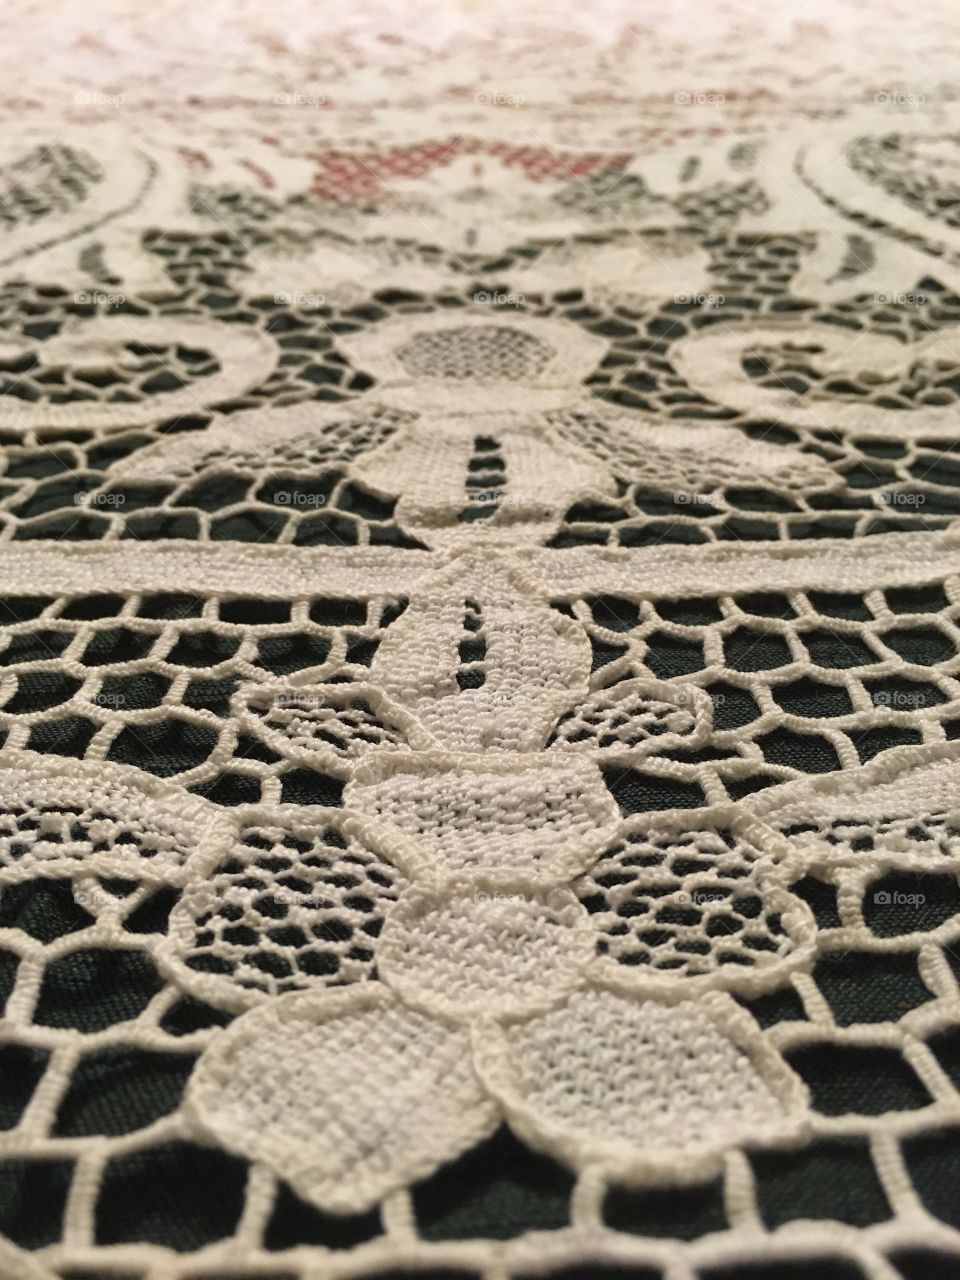 Antique handmade lace